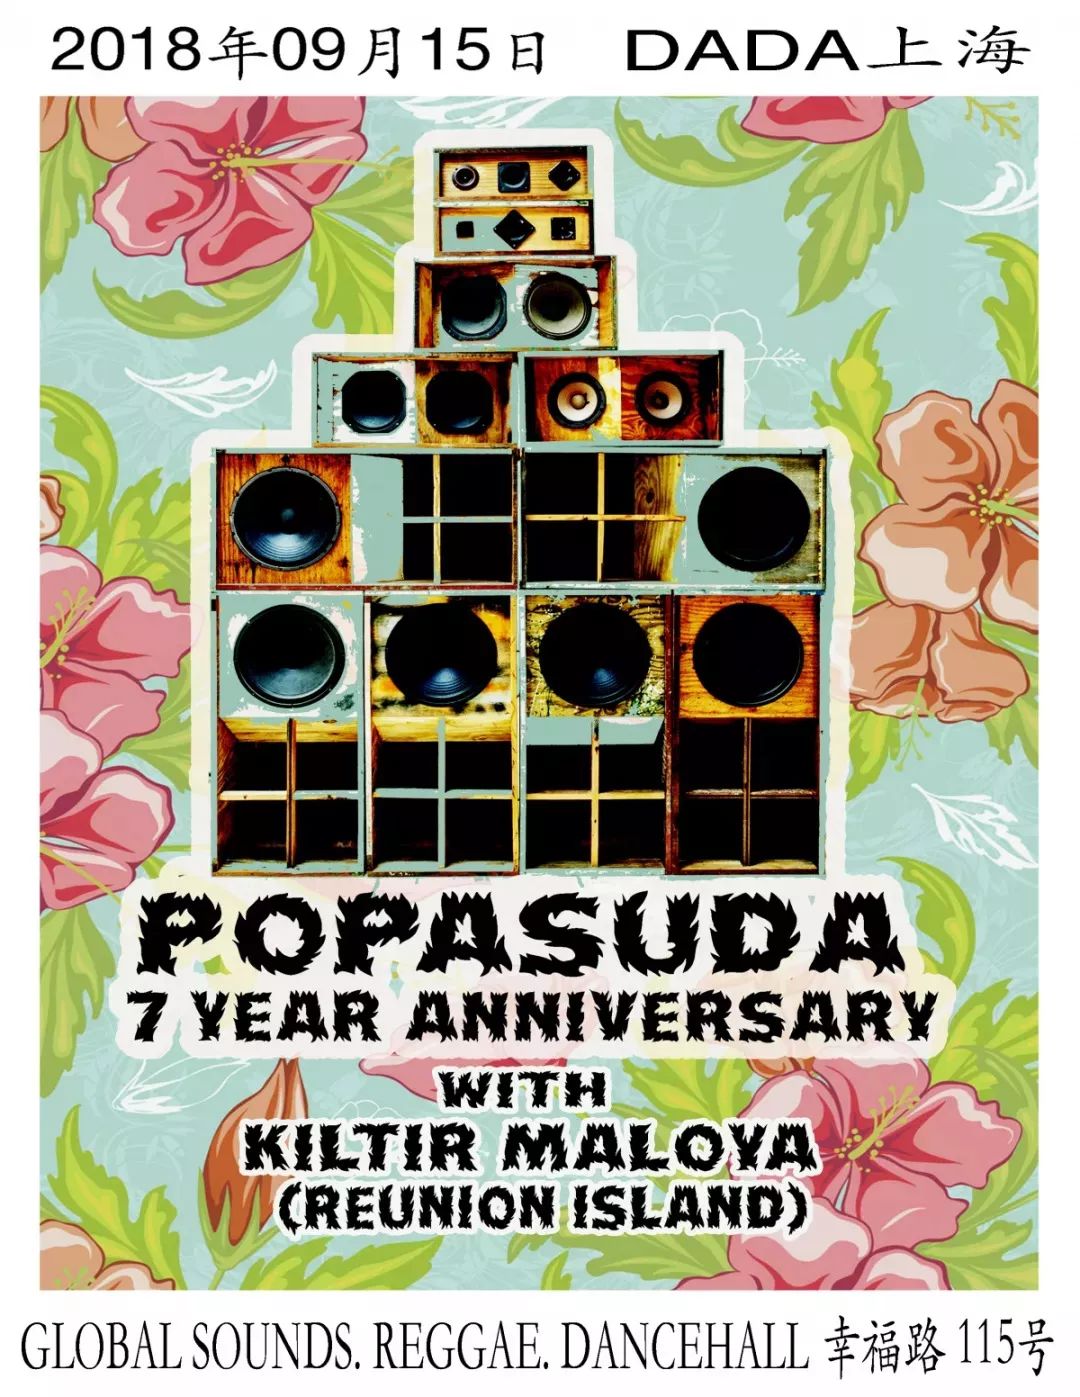 今晚 9月15日 Popasuda 7周年呈献 Kiltir Maloya Dada Shanghai 微信公众号文章阅读 Wemp